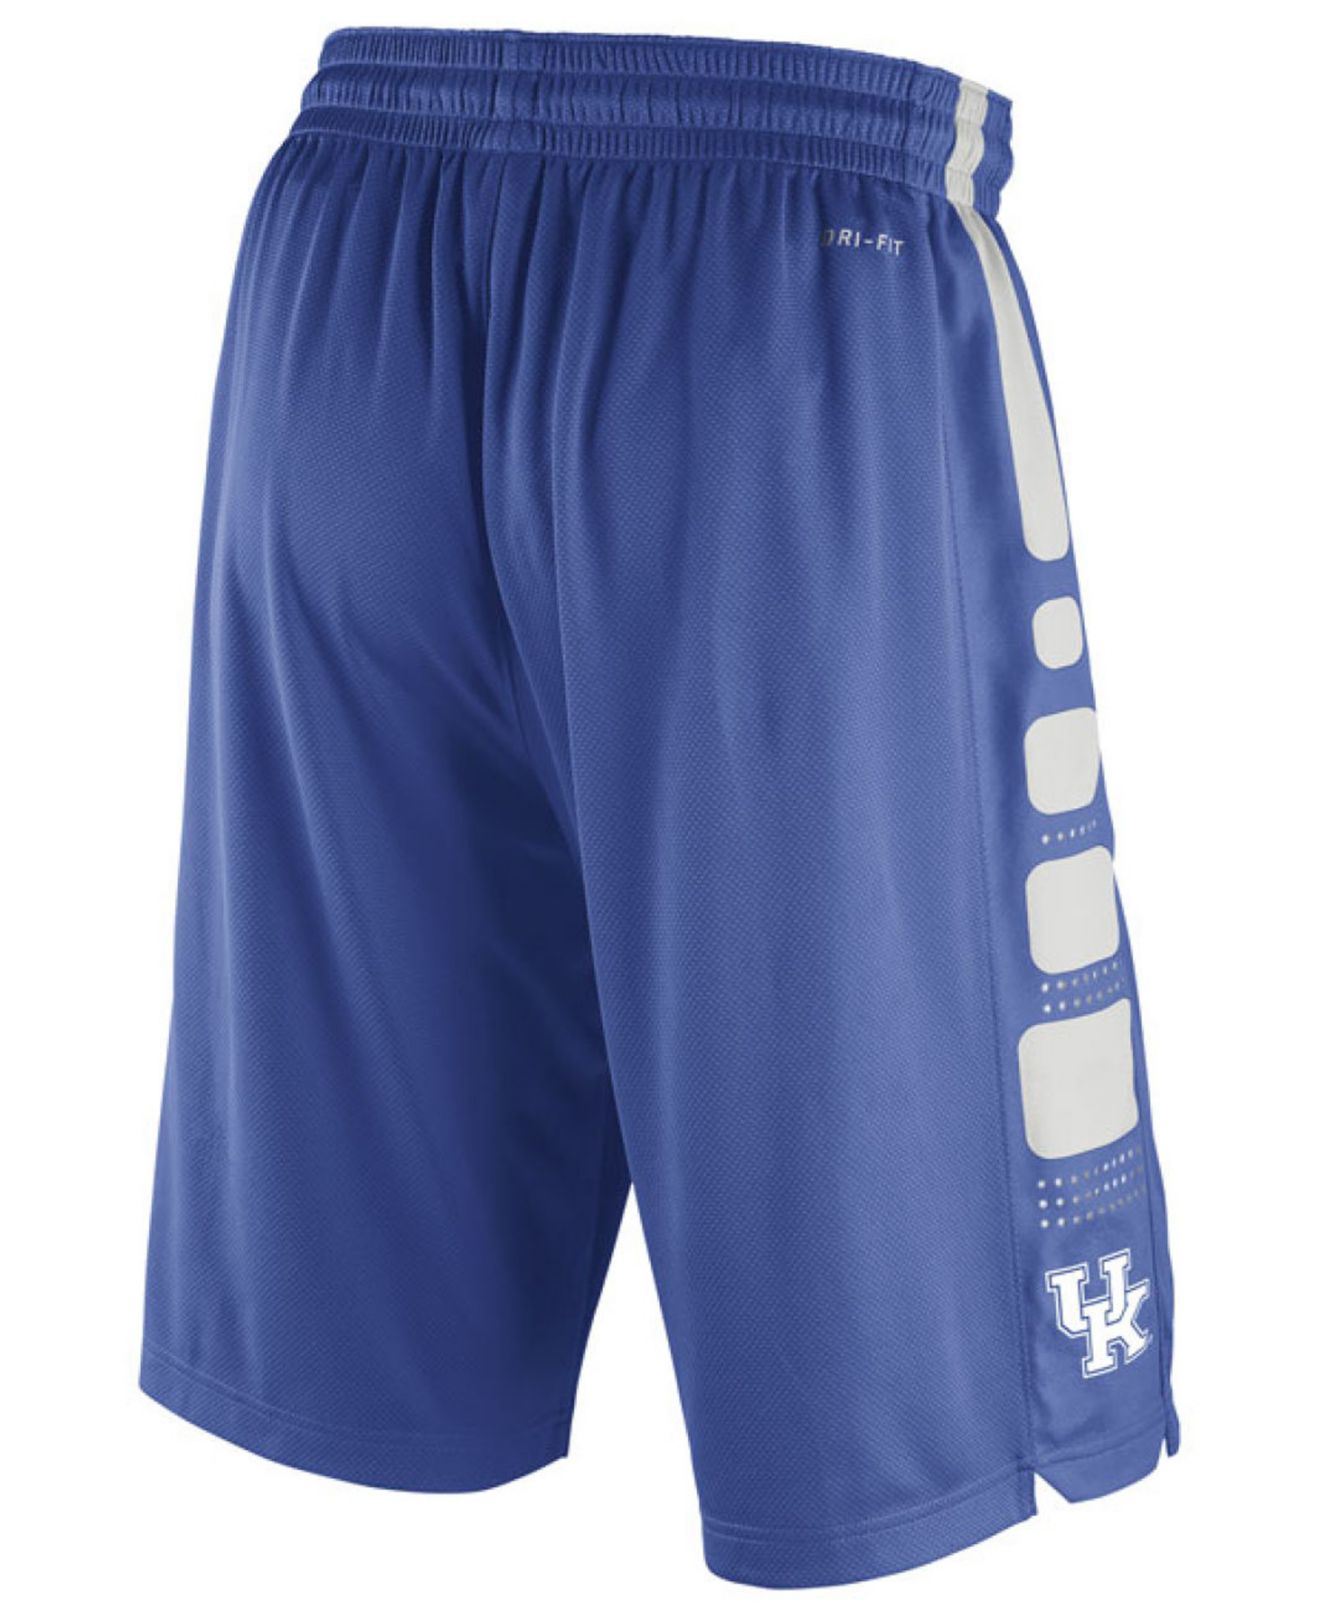 Lyst - Nike Men's Kentucky Wildcats Basketball Practice Elite Stripe ...